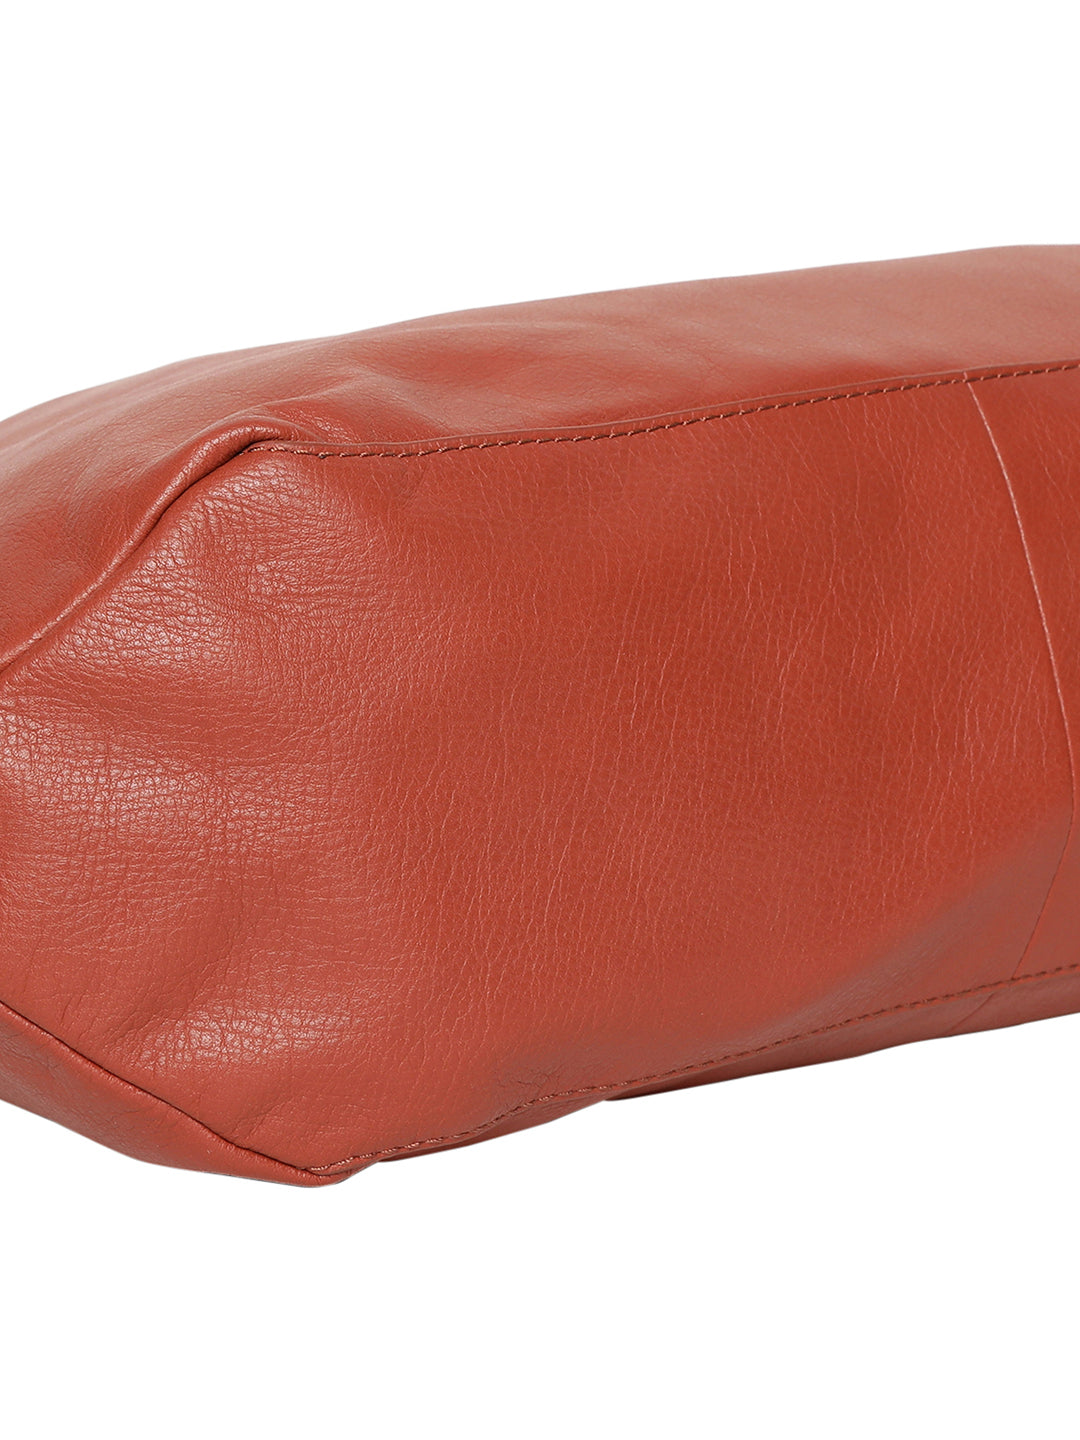 Sparone Light Brown Leather Braided Handle Shoulder Bag